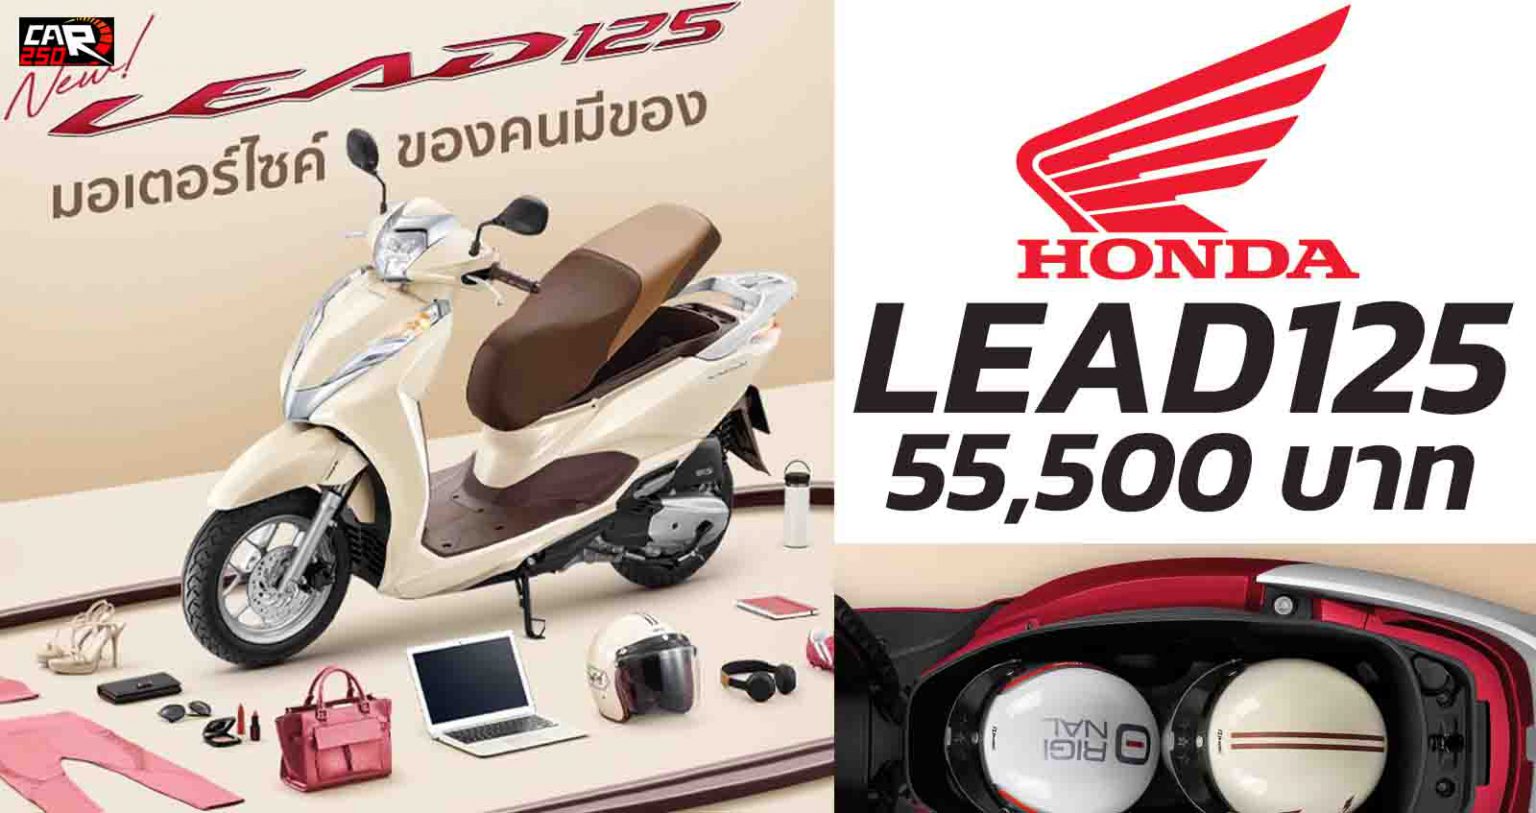 HONDA Lead 125 ราคา 55,500 บาท ในไทย - รถใหม่วันนี้ : CAR250